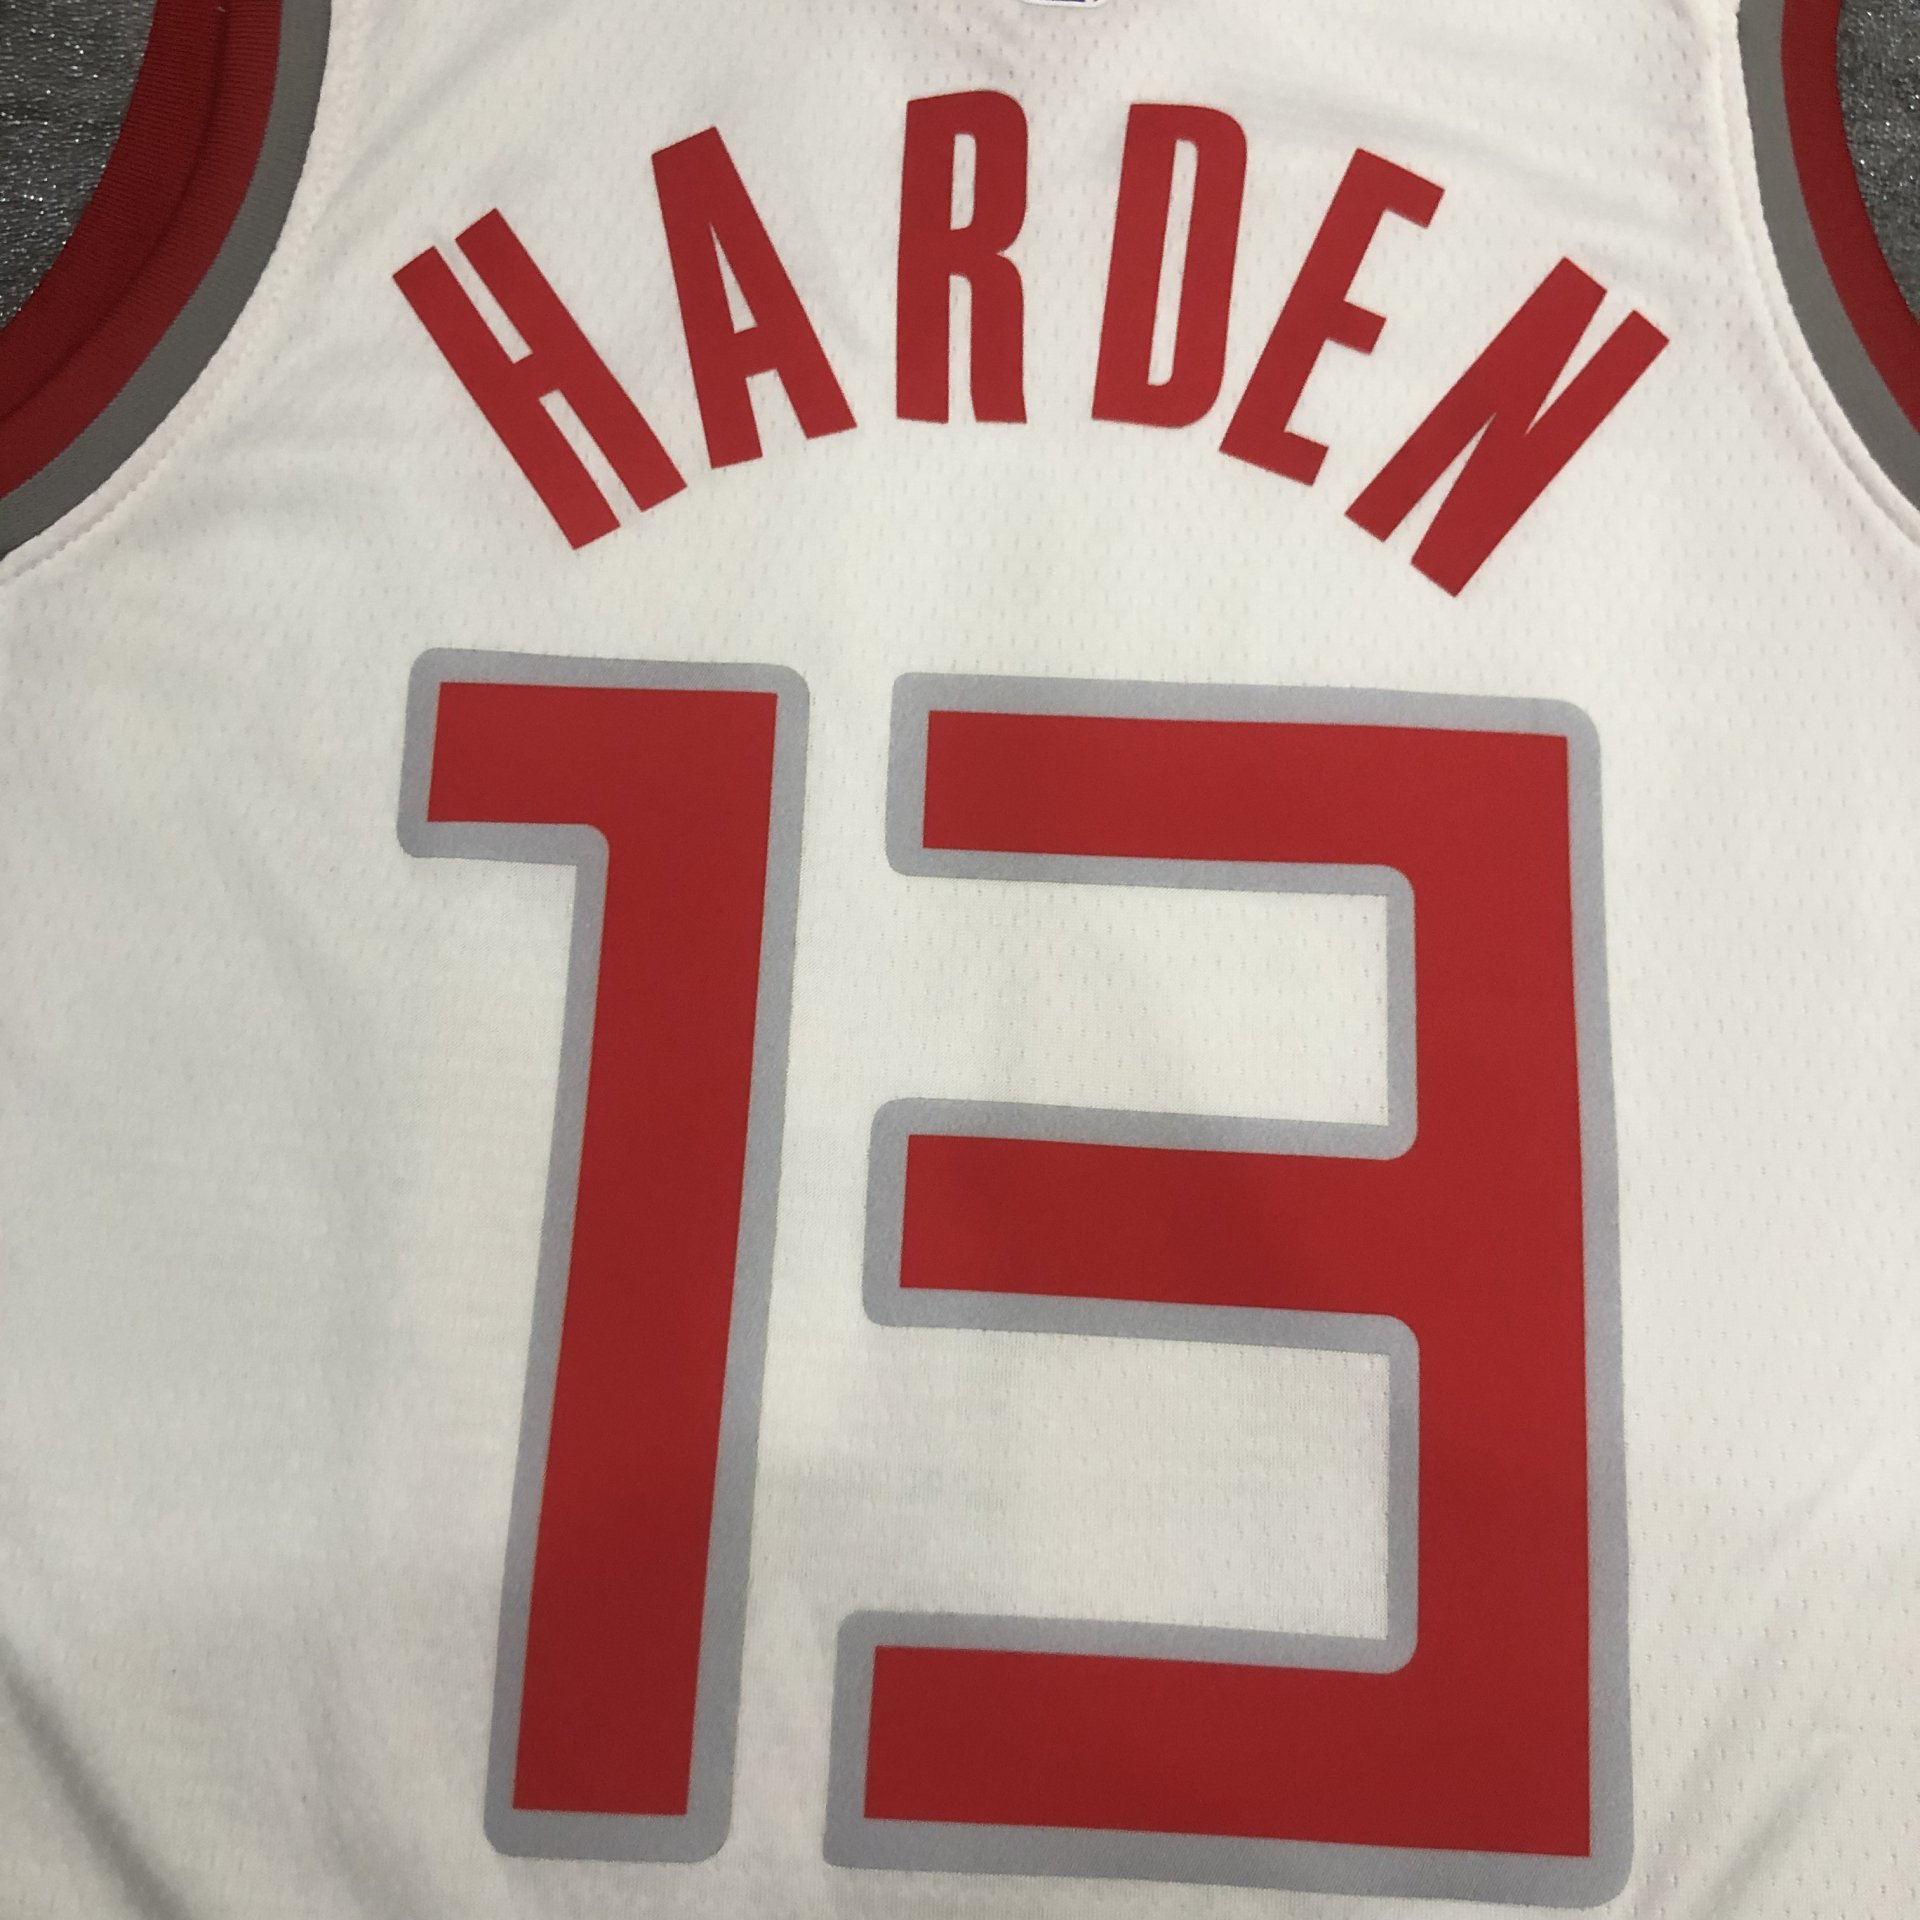 Adidas Houston Rockets James Harden #13 Basketball Jersey - Size Men’s L